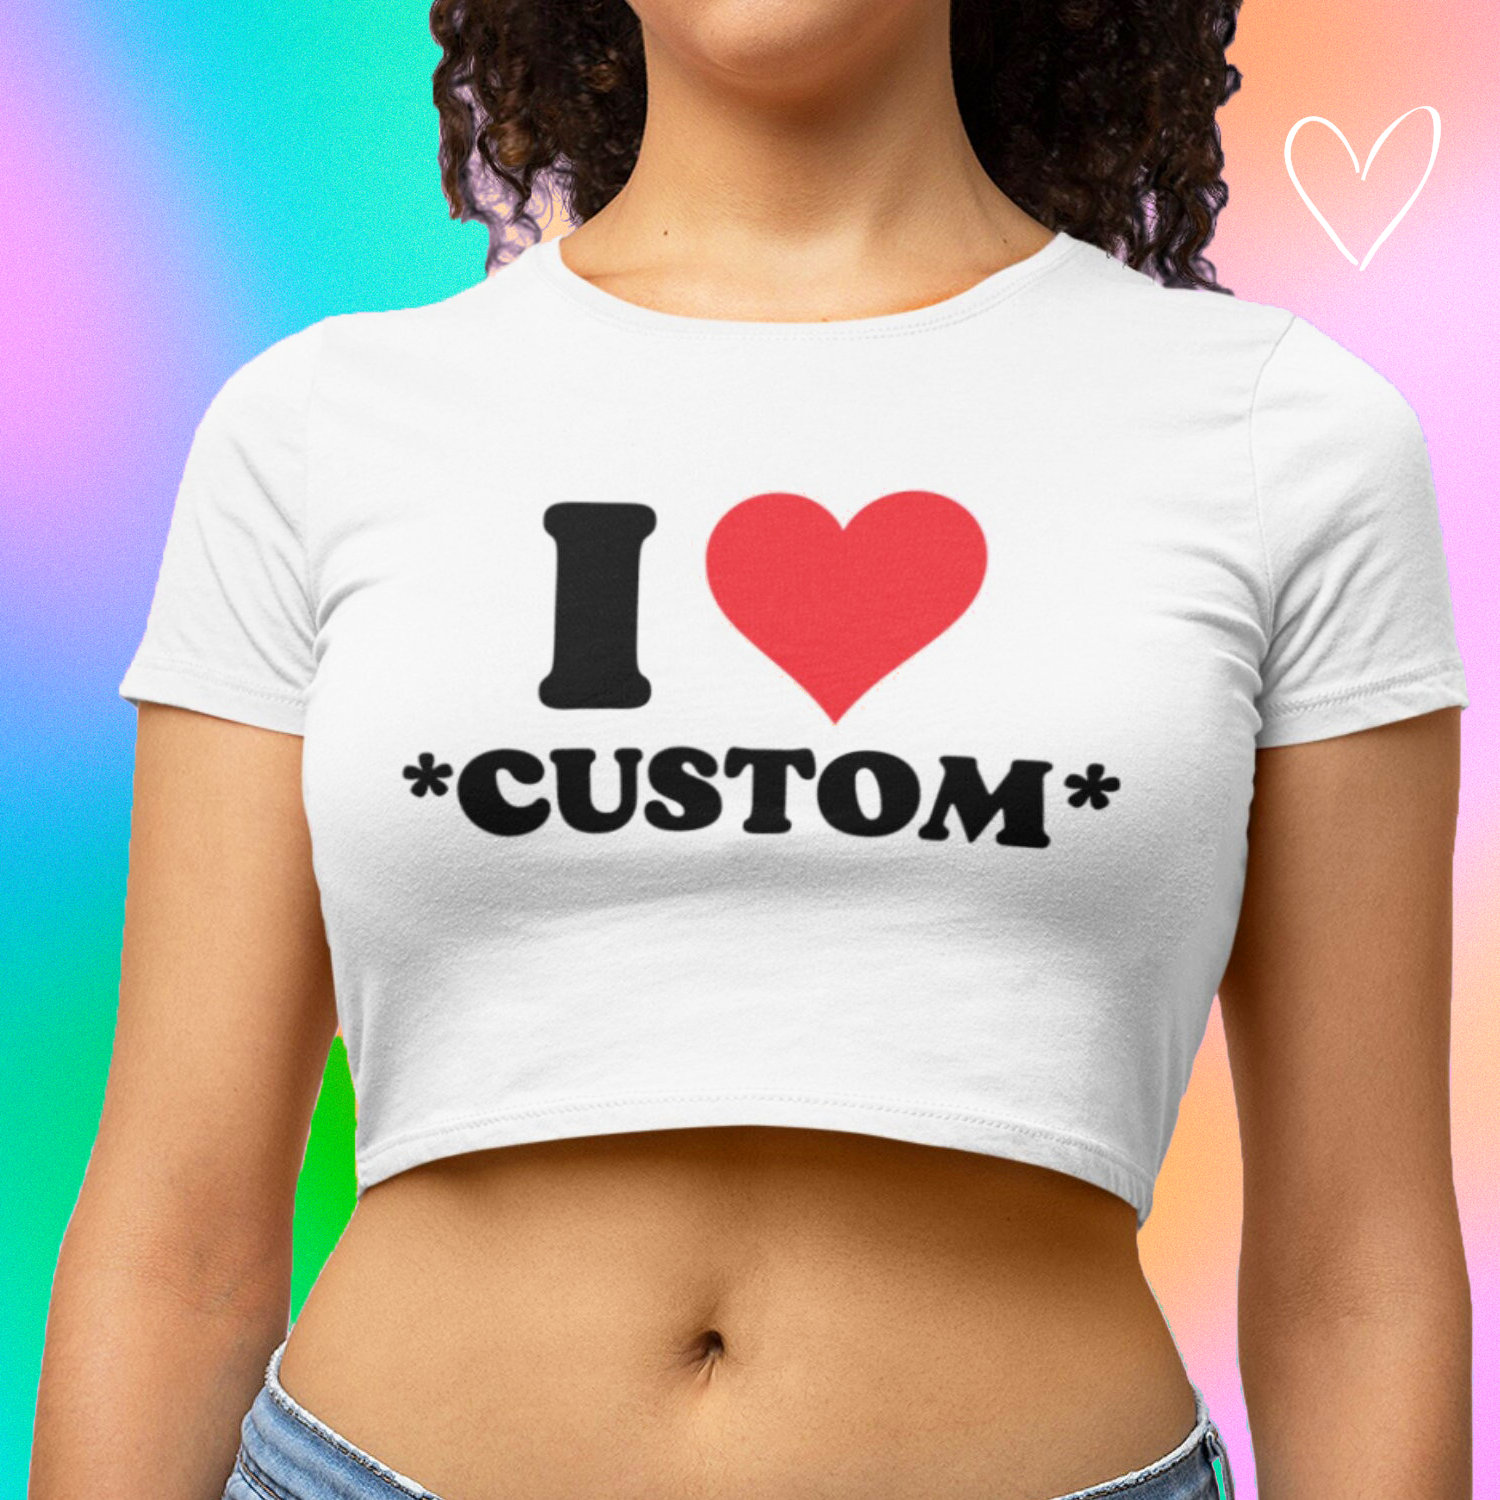 Retro Y2K Clothing: Create Your Own Custom I Heart Shirt